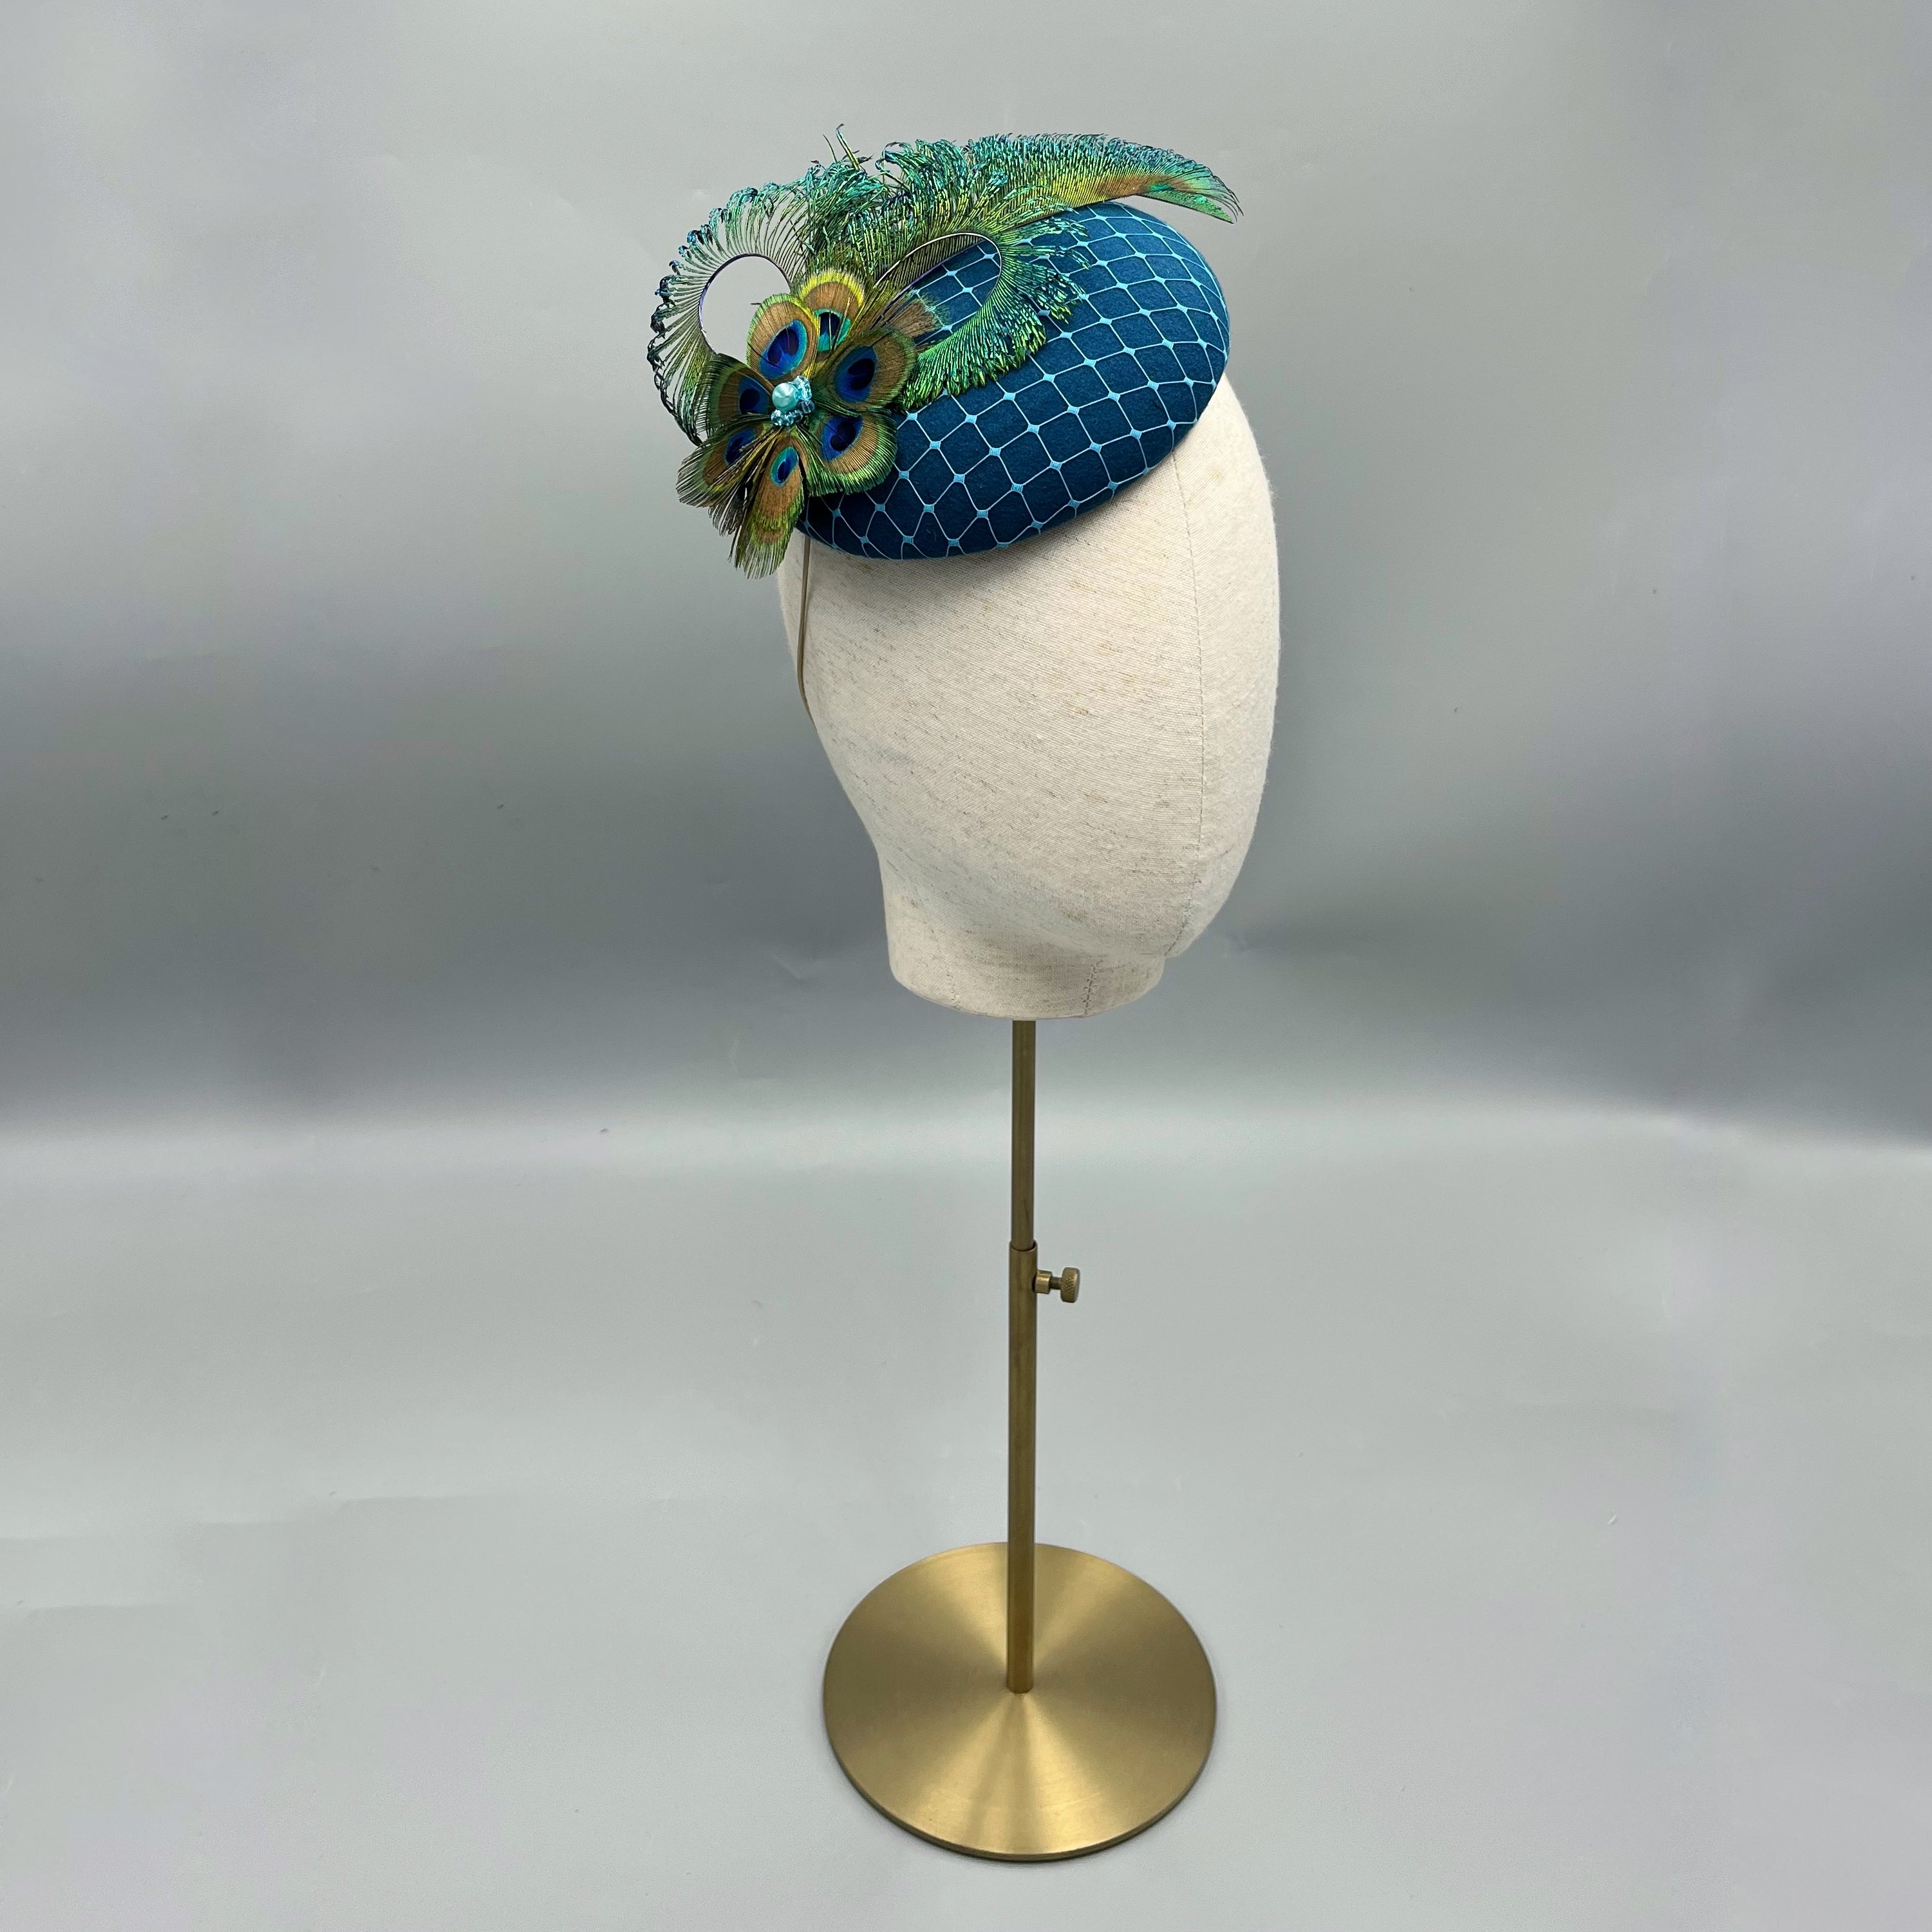 teal peacock felt hat